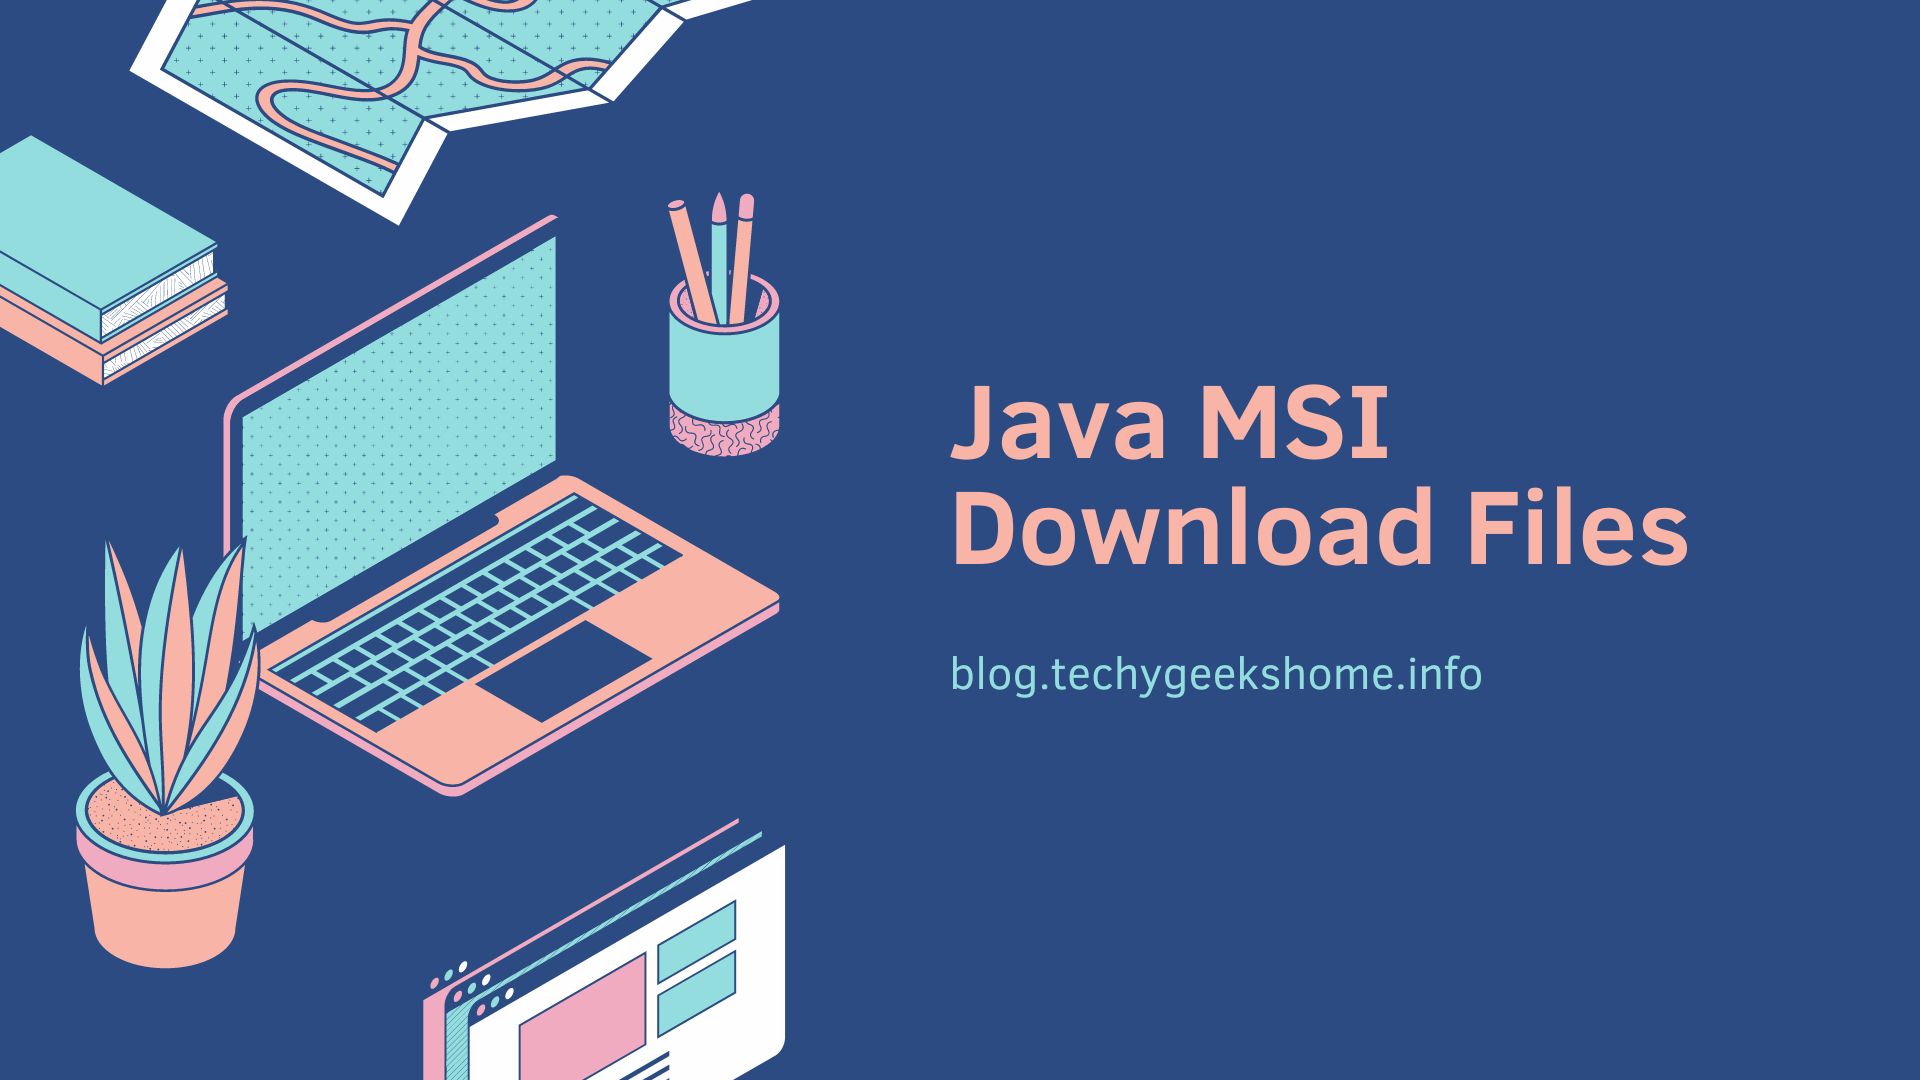 Java MSI Downloads